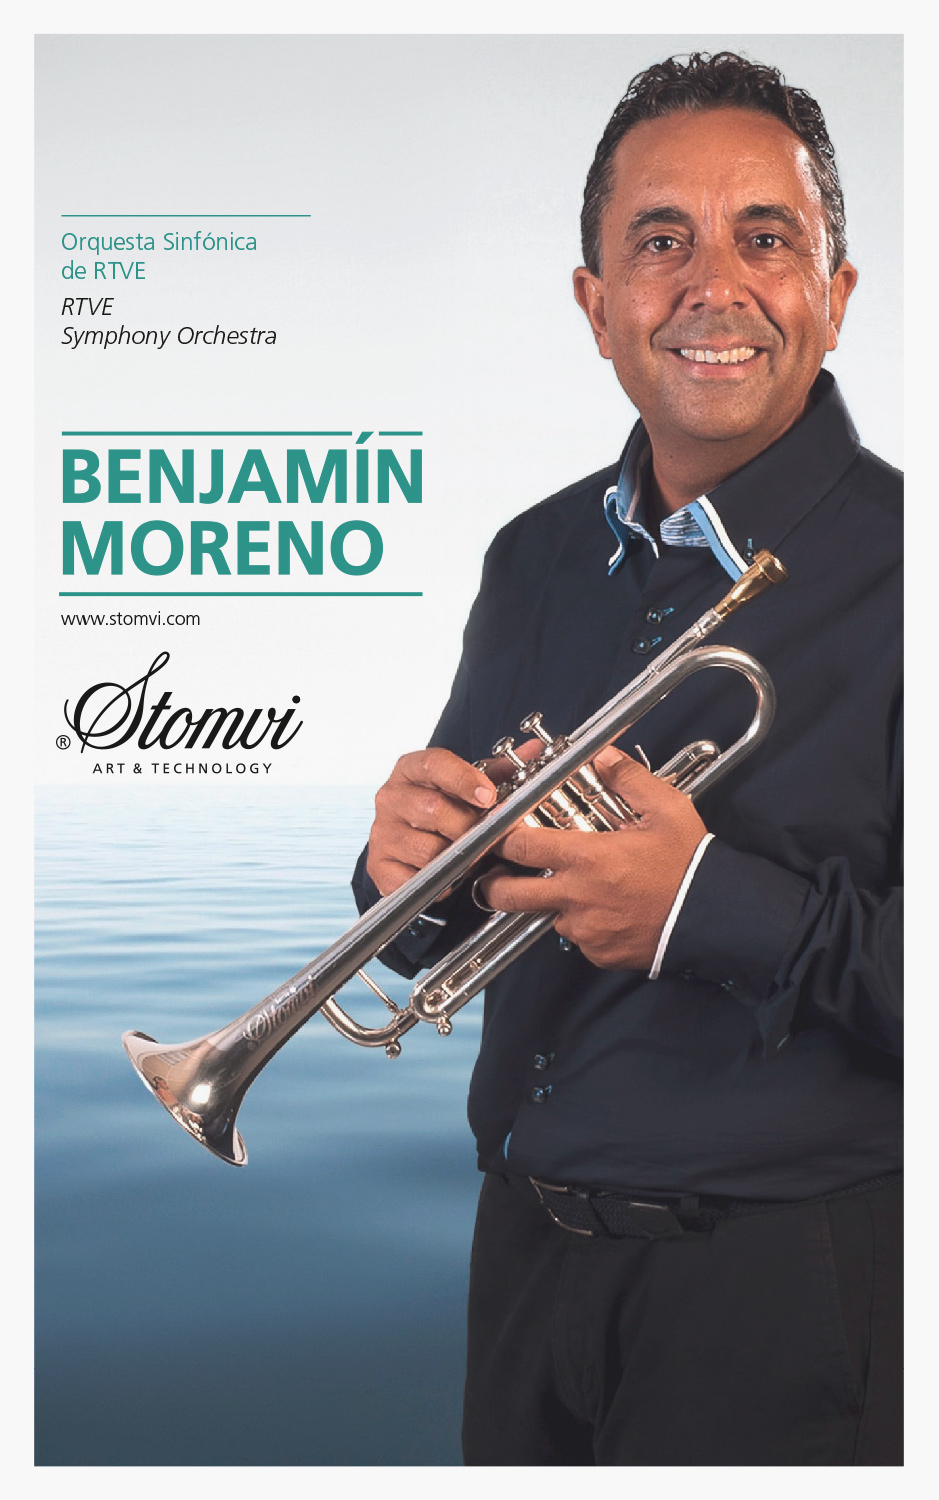 Benjamín Moreno